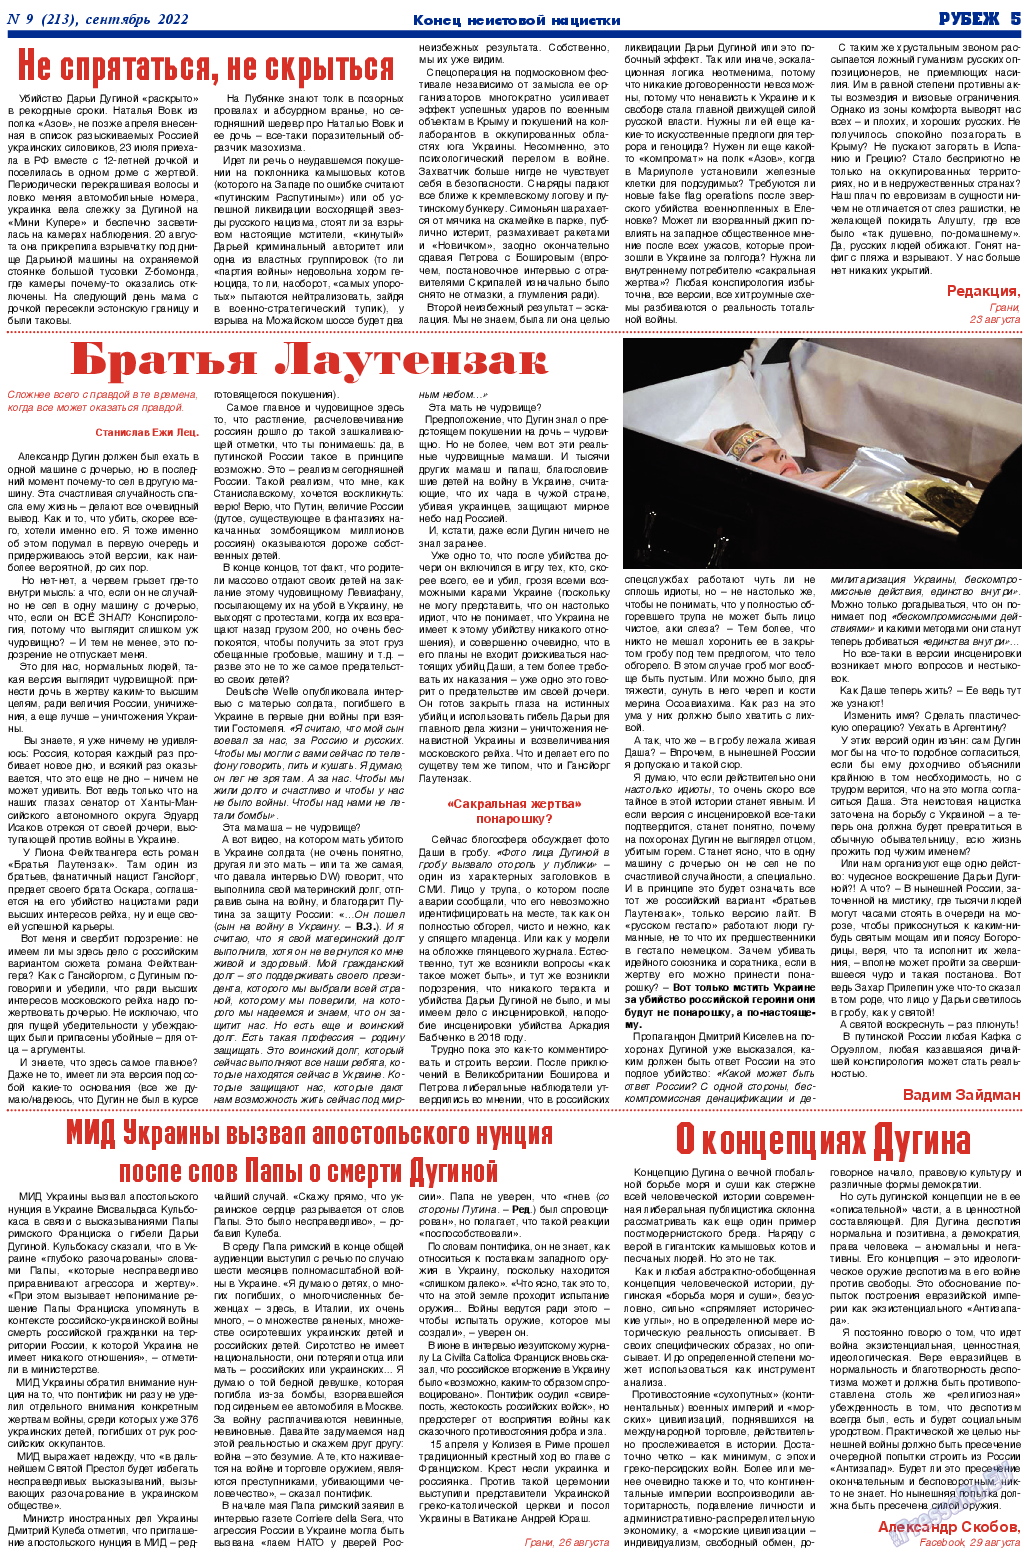 Рубеж, газета. 2022 №9 стр.5